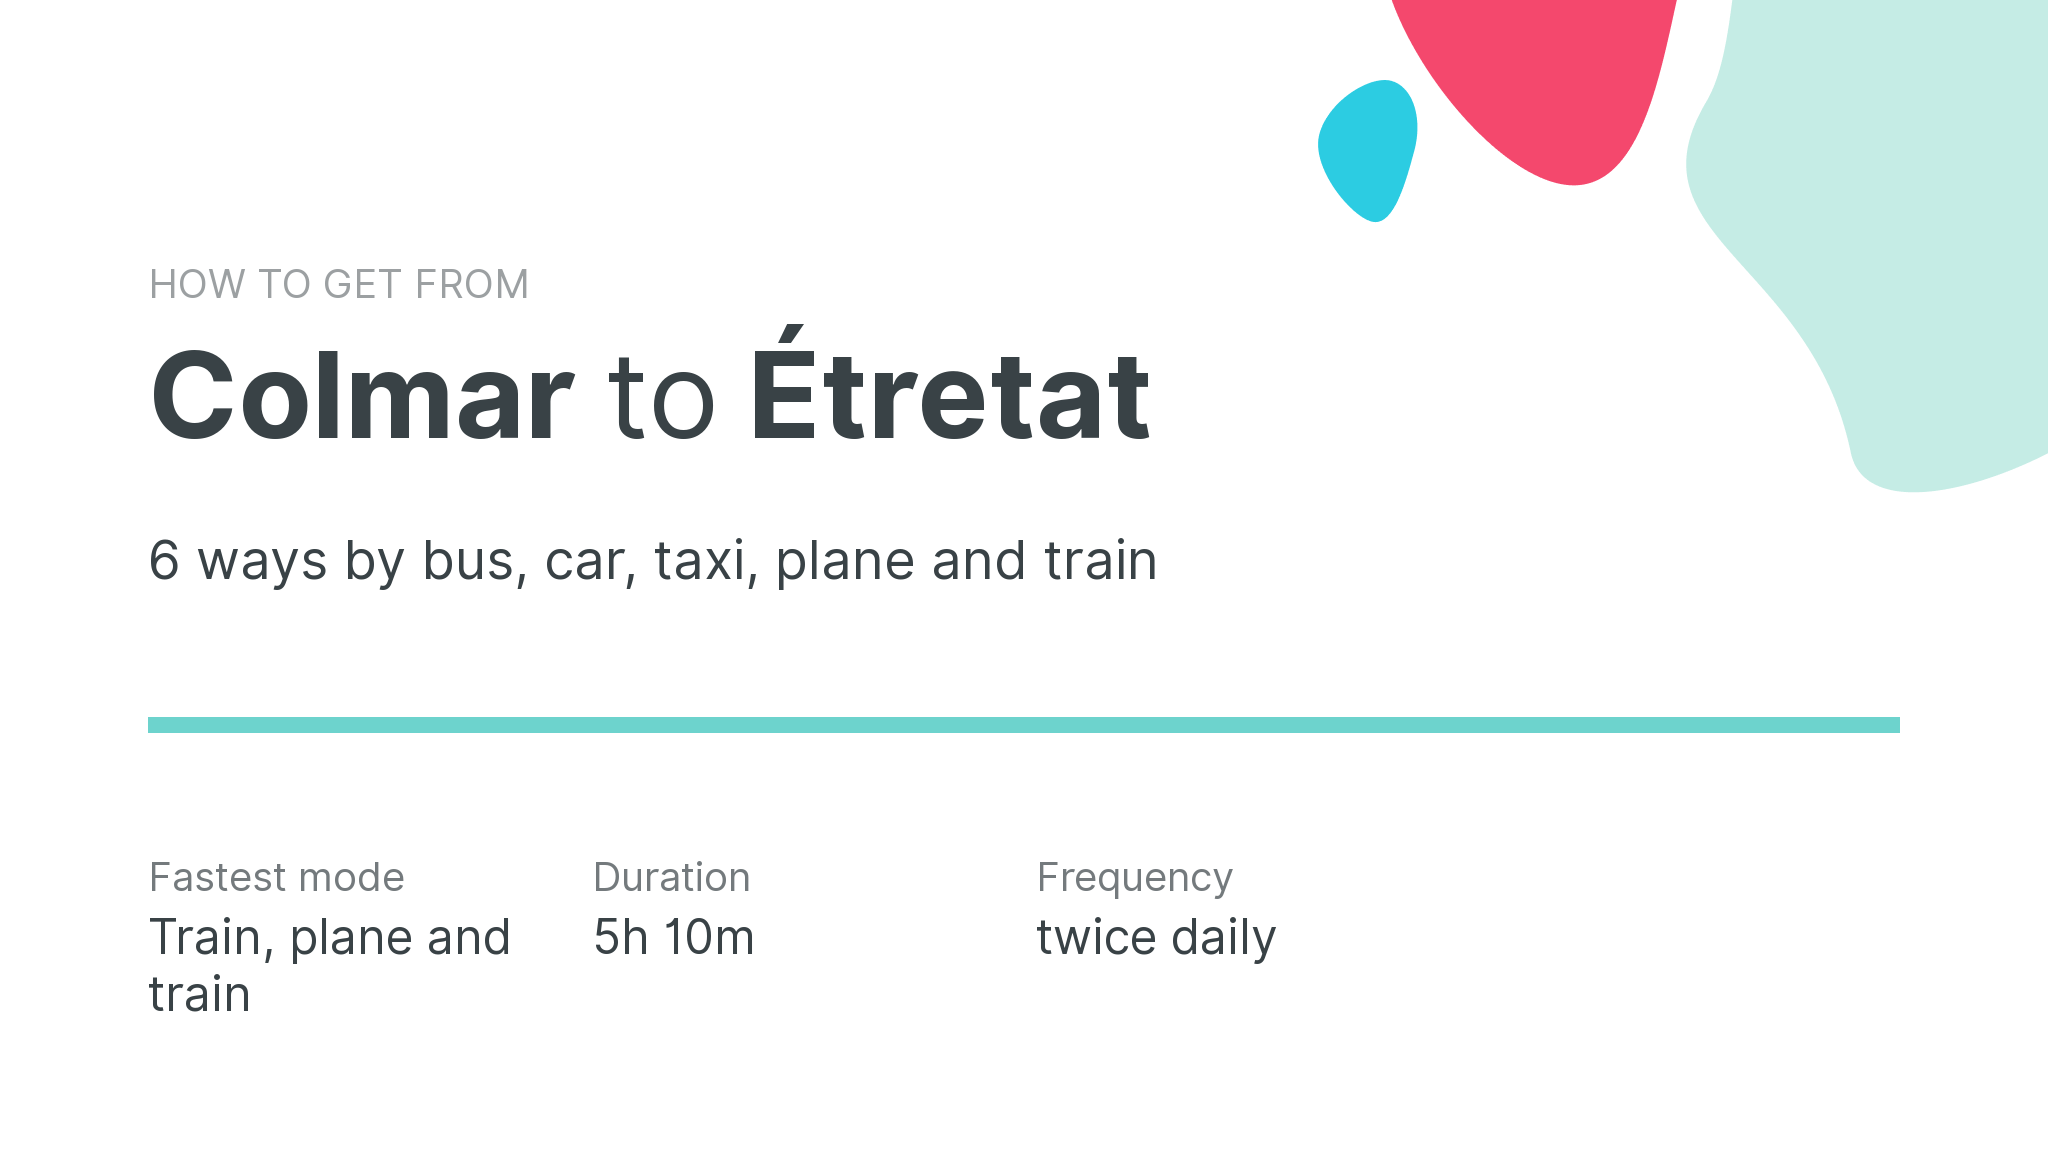 How do I get from Colmar to Étretat